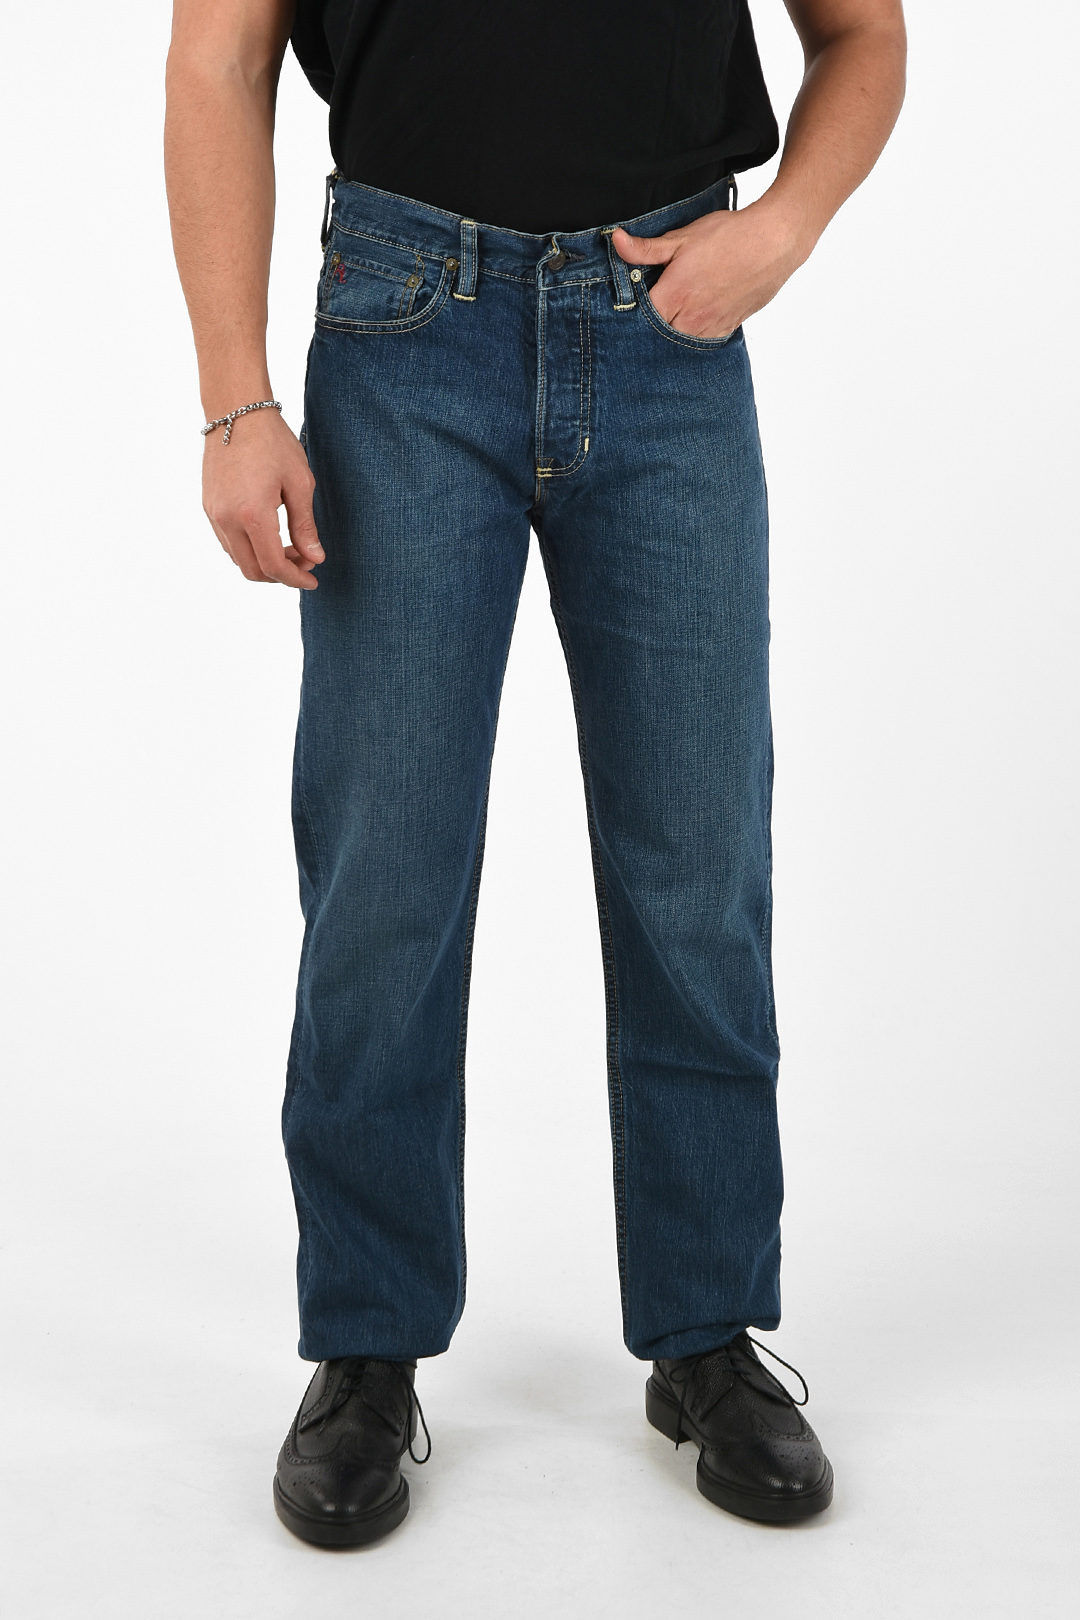 Polo Ralph Lauren 22cm straight fit 650 jeans L34 men - Glamood Outlet